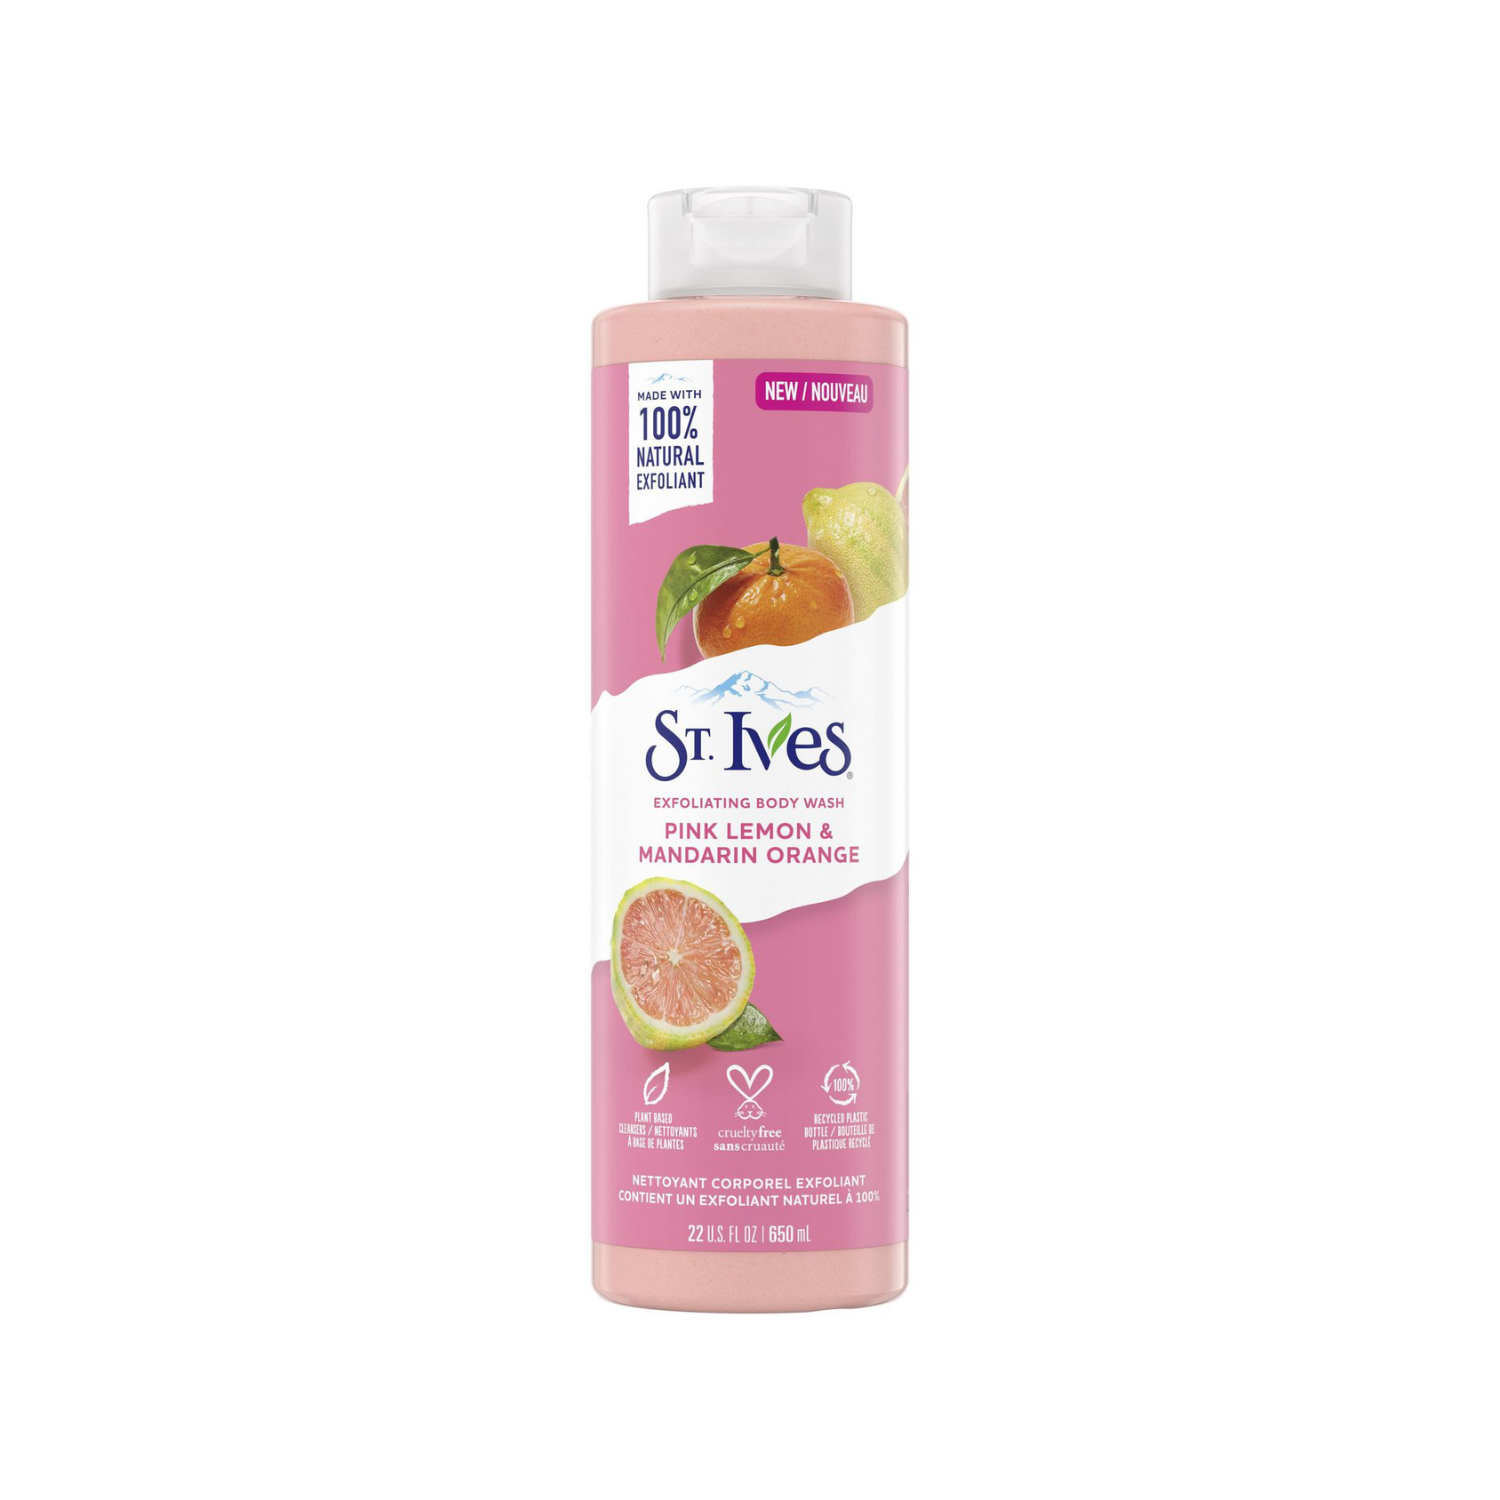 st-ives-exfoliationg-body-wash-pink-lemon-mandarin-orange-usa-650ml